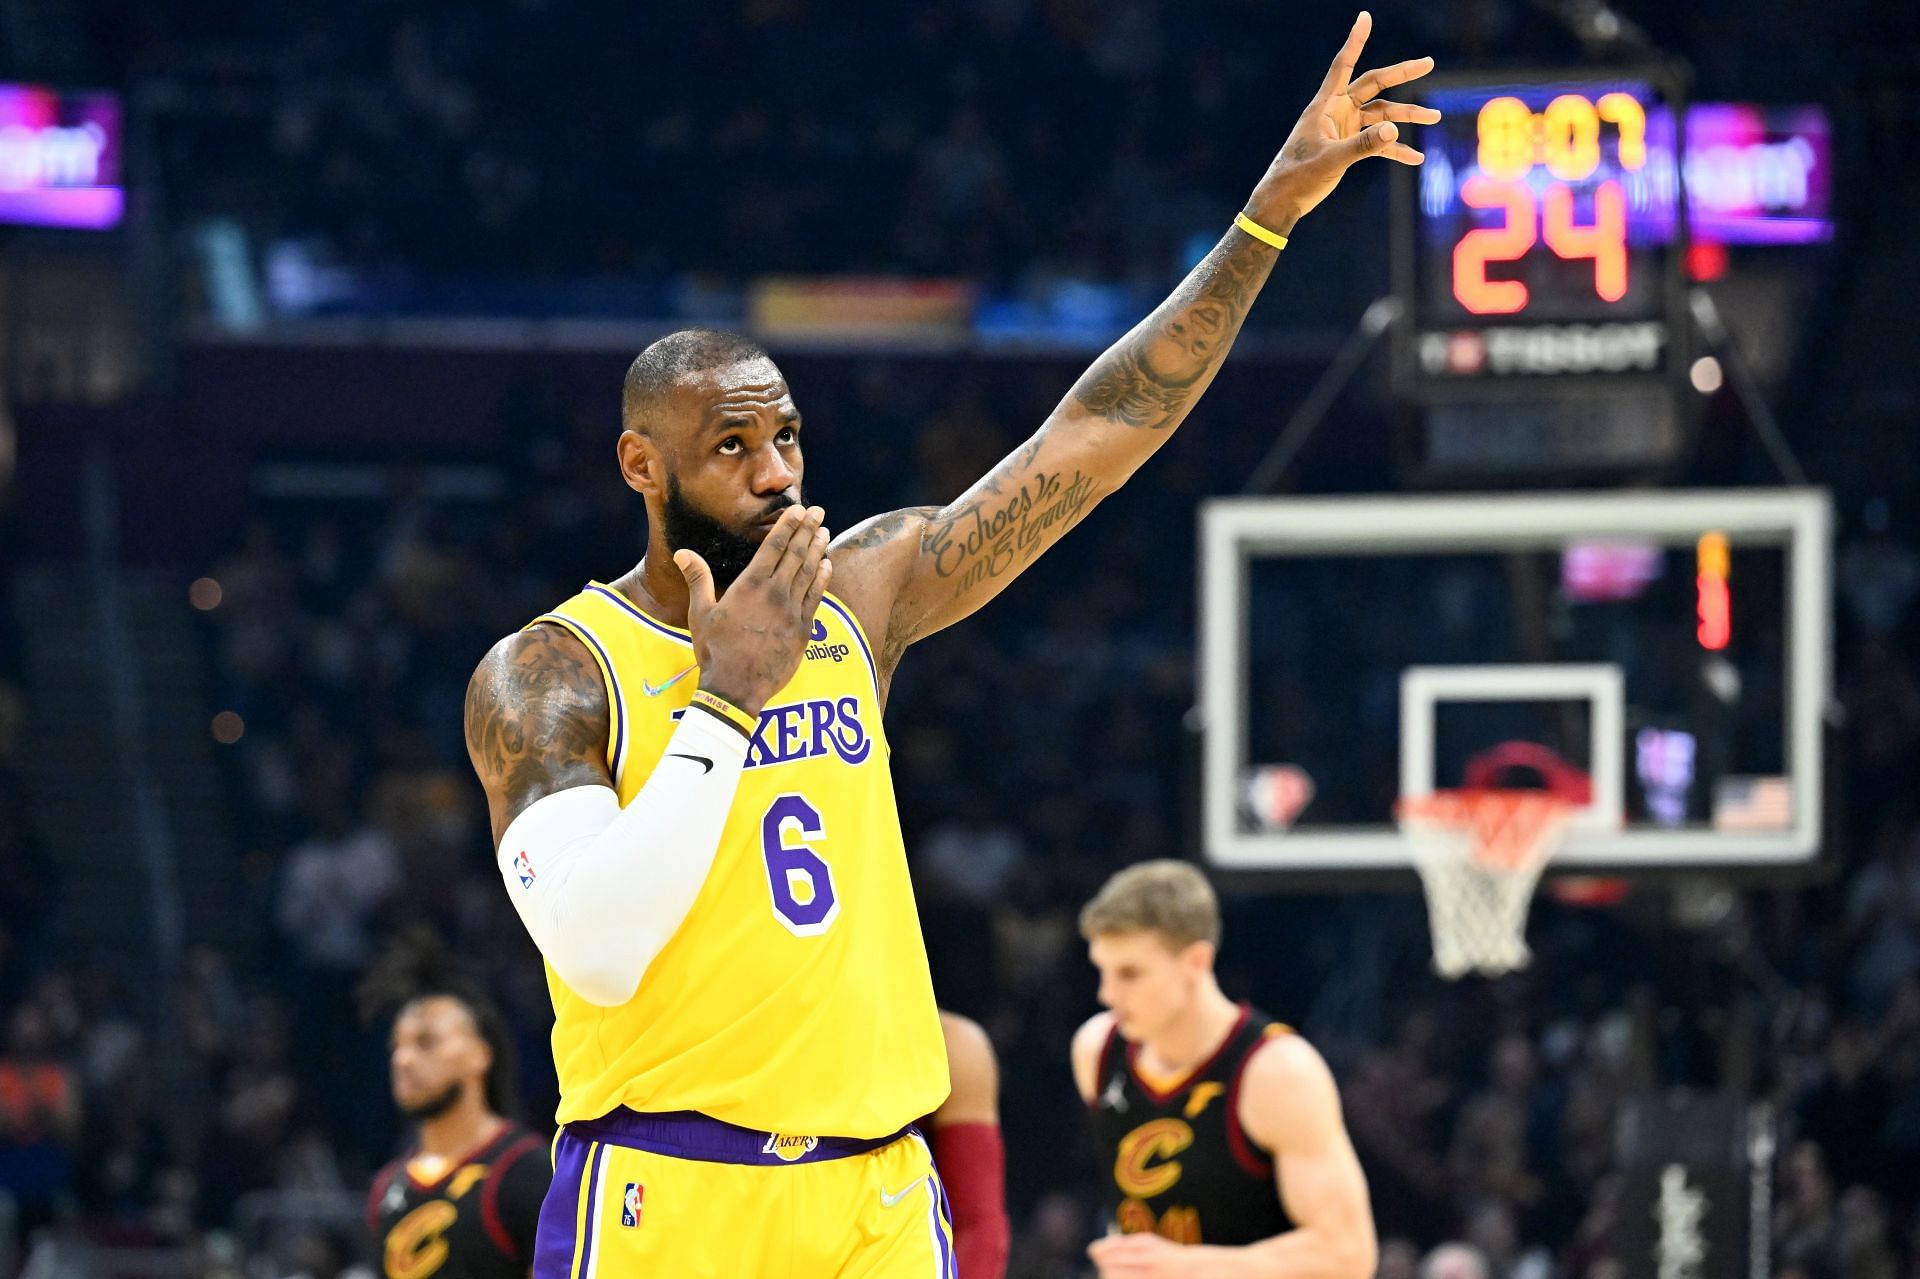 LA Lakers All-Star LeBron James